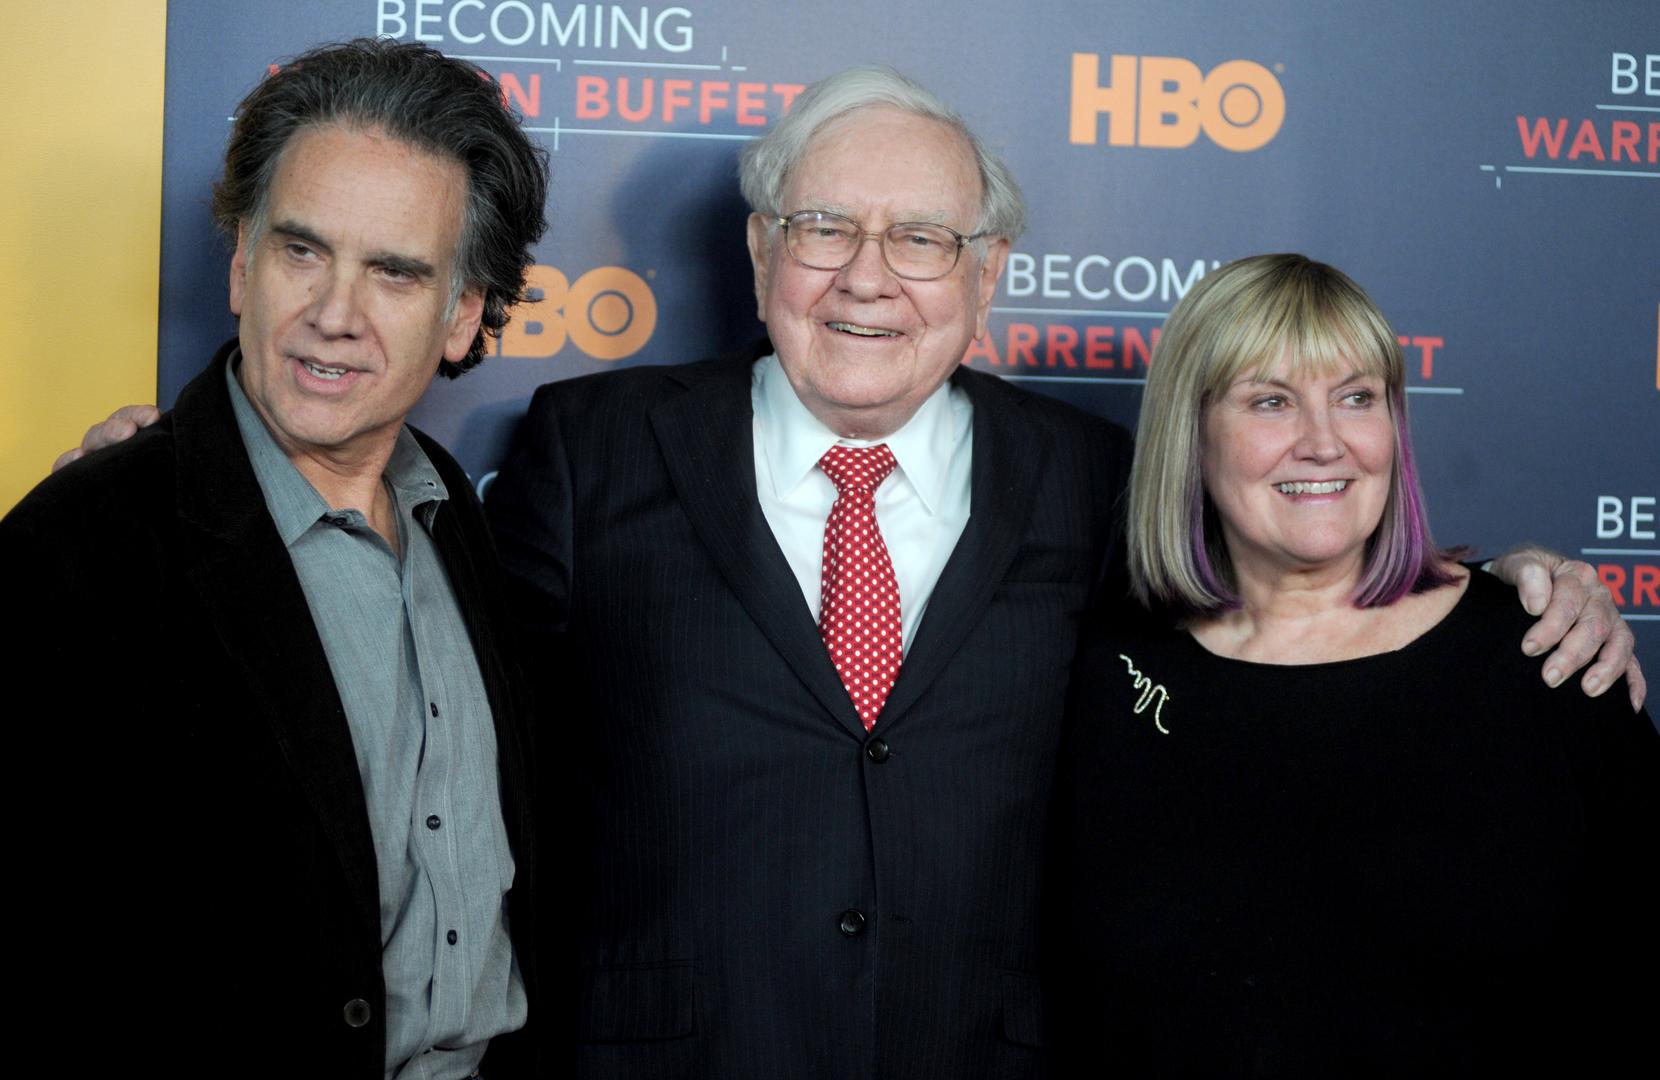 Peter (sin), Warren i Susie (kći) Buffett na premijeri dokumentarca o Warrenu